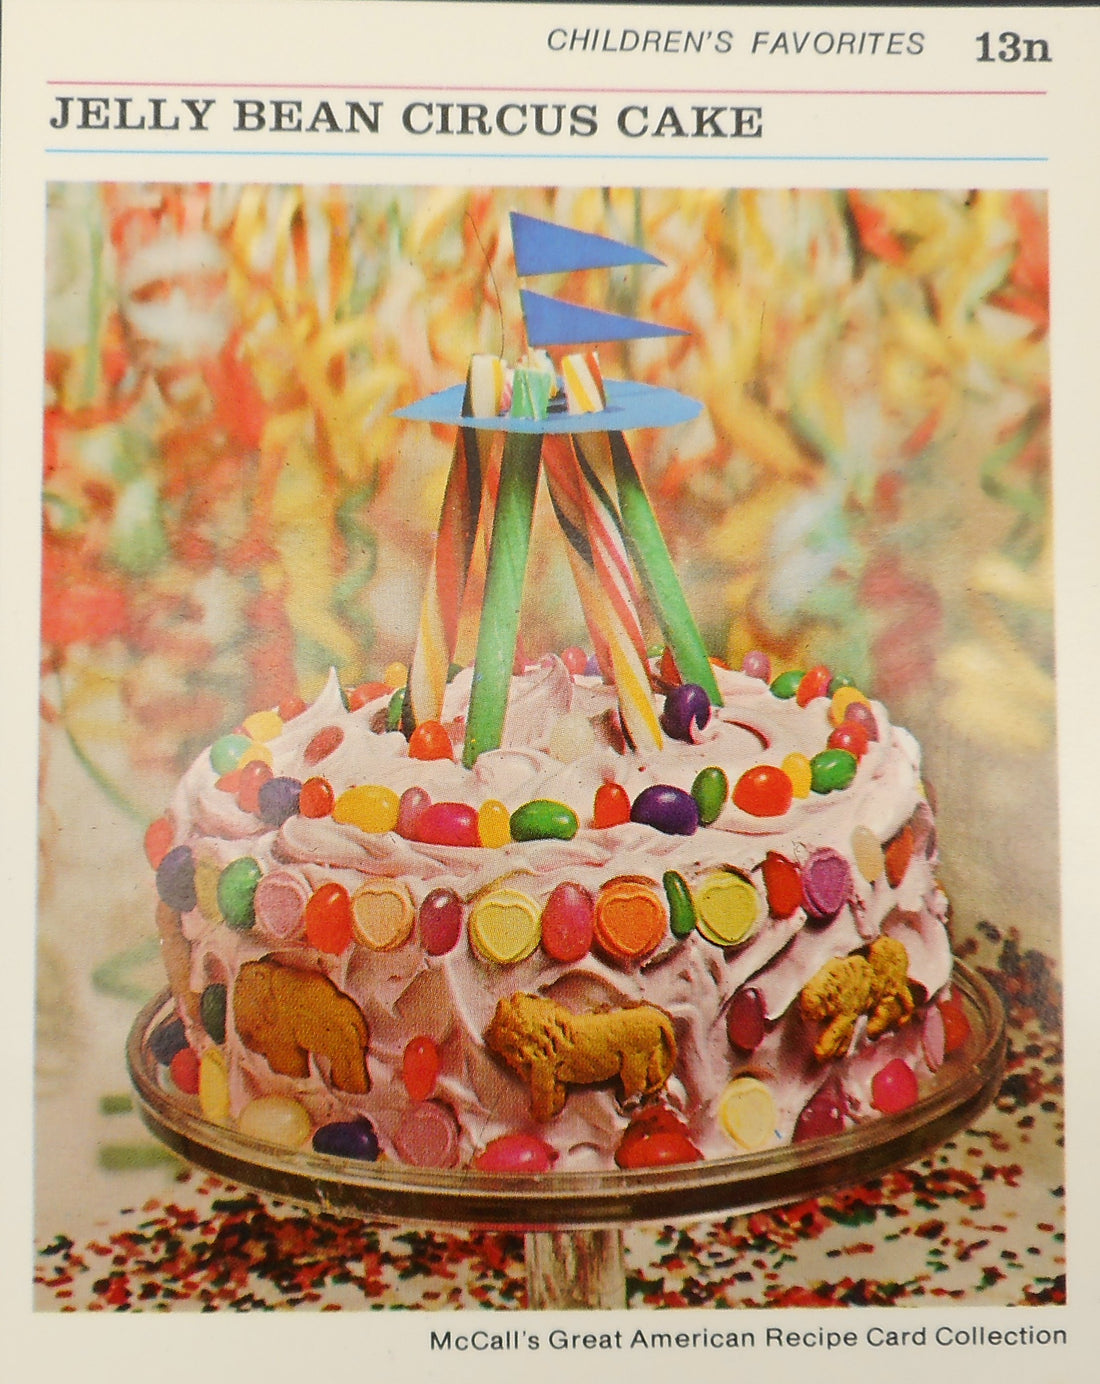 1970's McCall's Great American Recipe Card - Jelly Bean Circus Cake